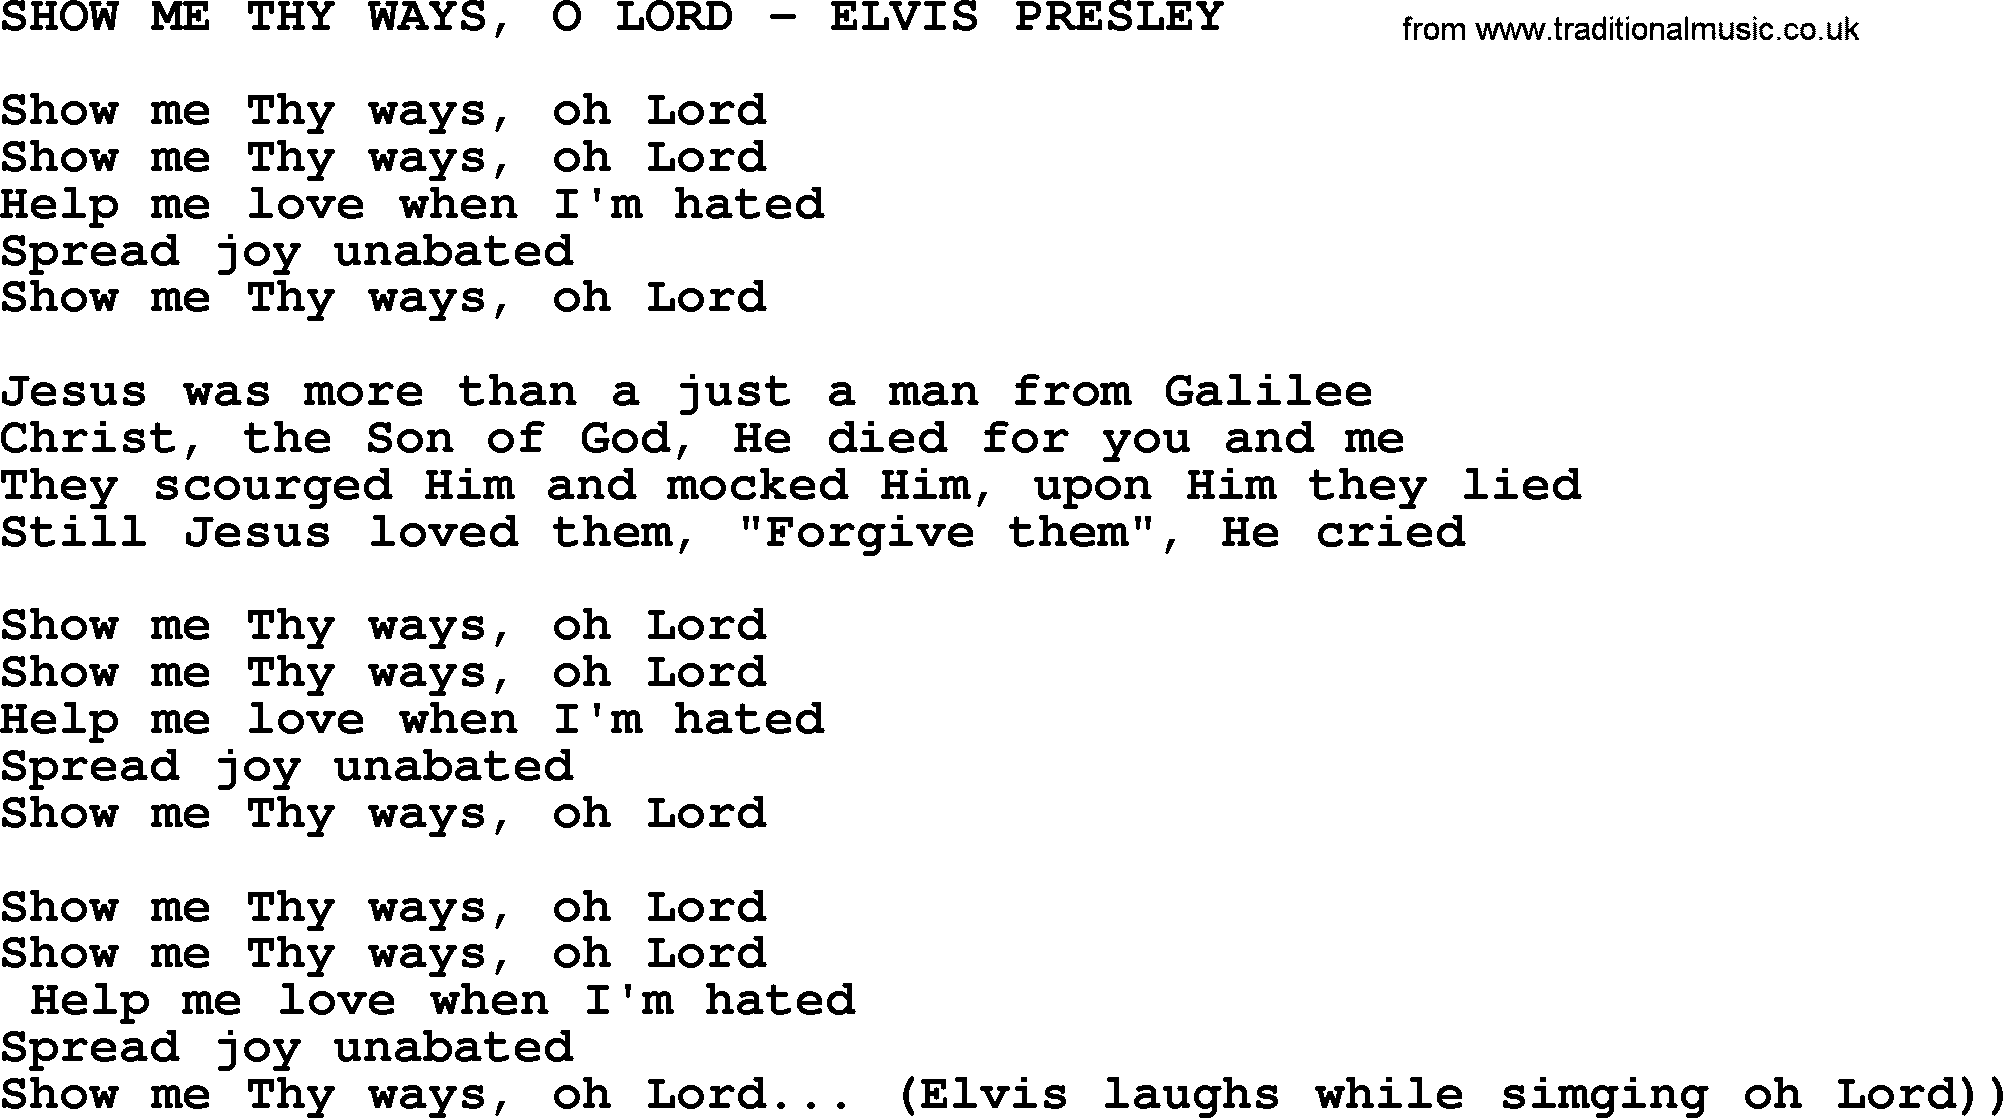 Elvis Presley song: Show Me Thy Ways, O Lord-Elvis Presley-.txt lyrics and chords